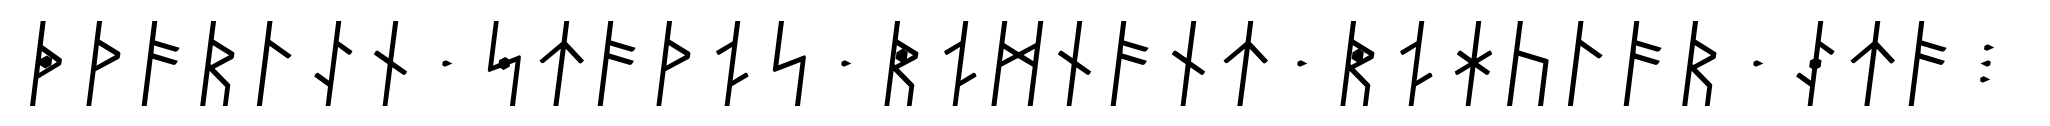 Dvarlin Staves Remnant Regular Italic image